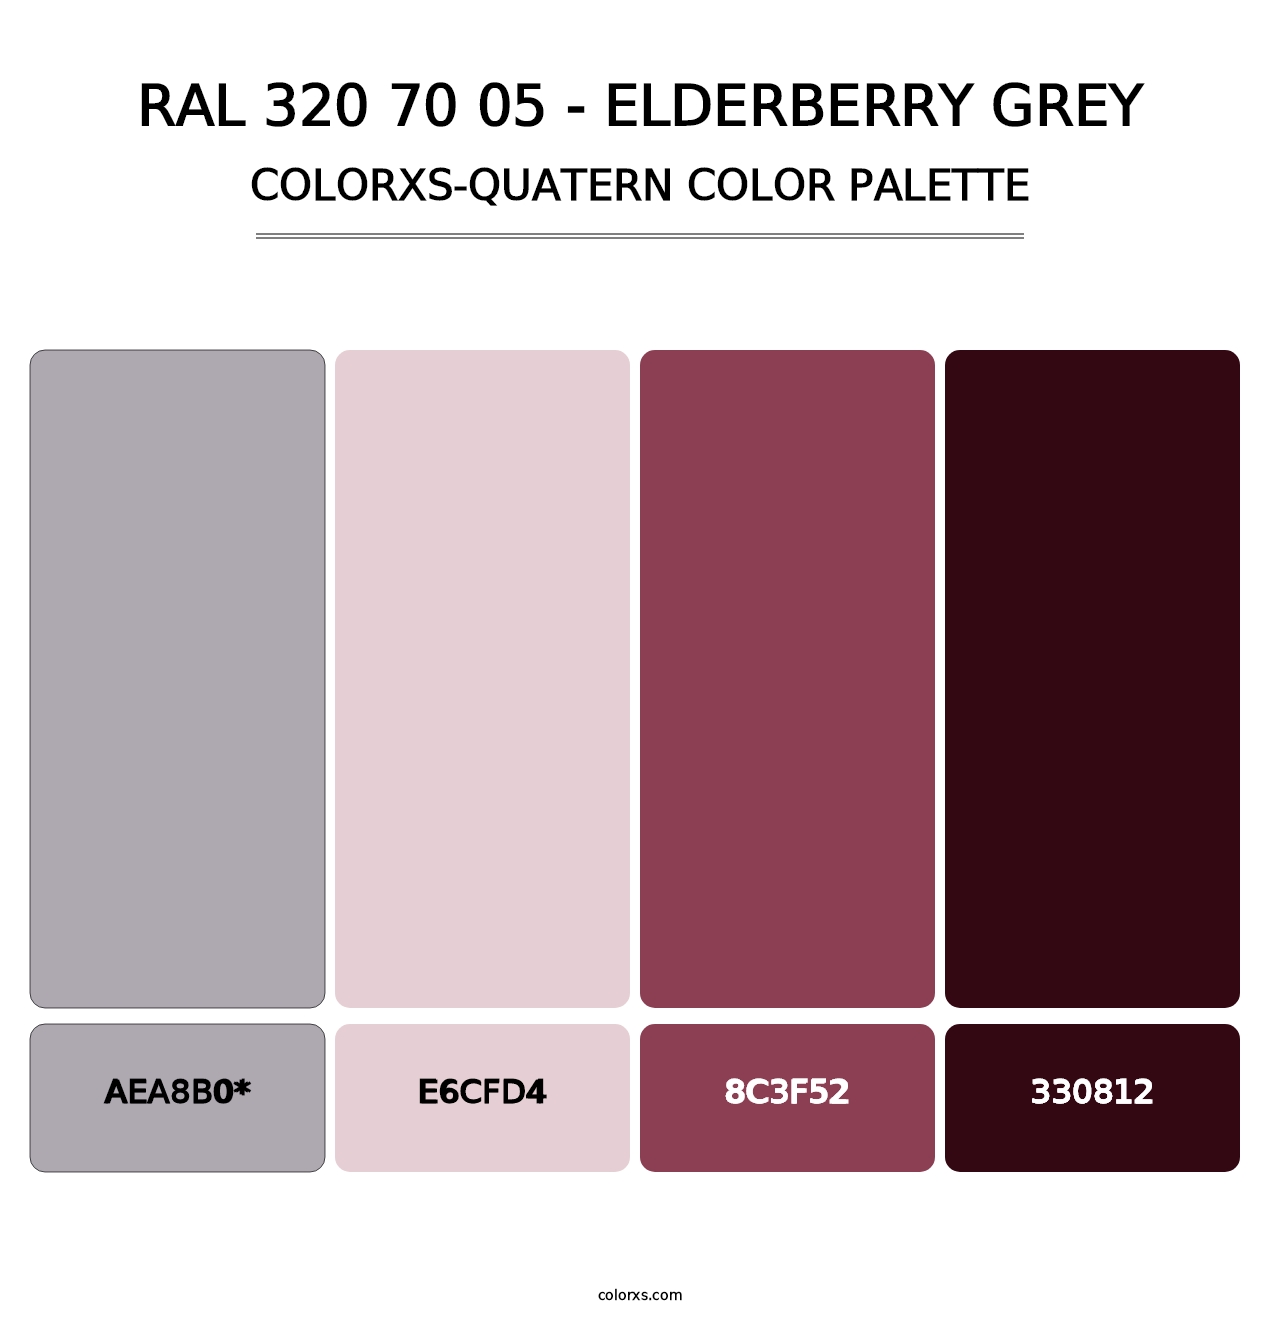 RAL 320 70 05 - Elderberry Grey - Colorxs Quatern Palette